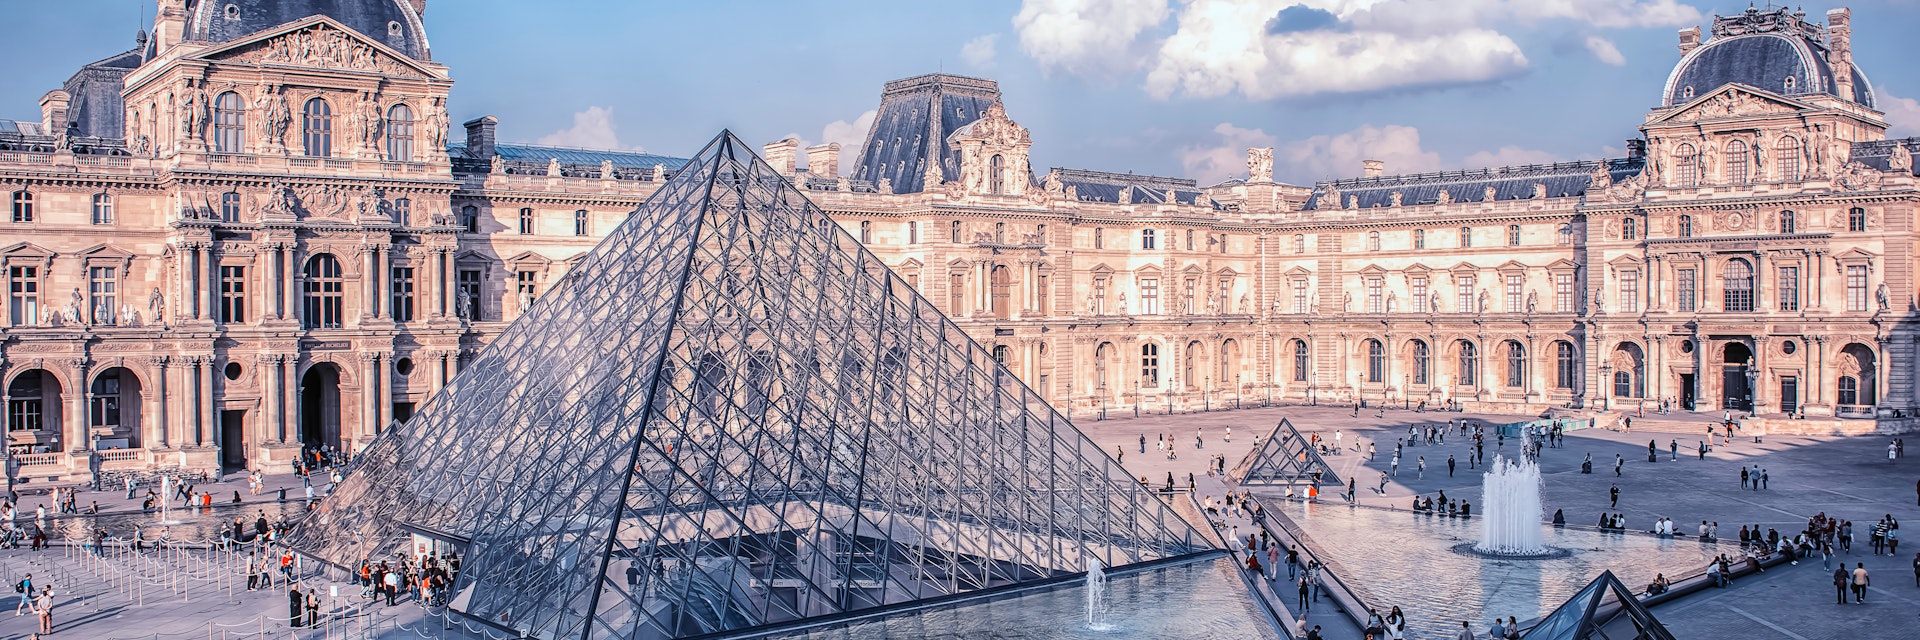 September 2016 - Paris, France- Le Louvre museum in daytime